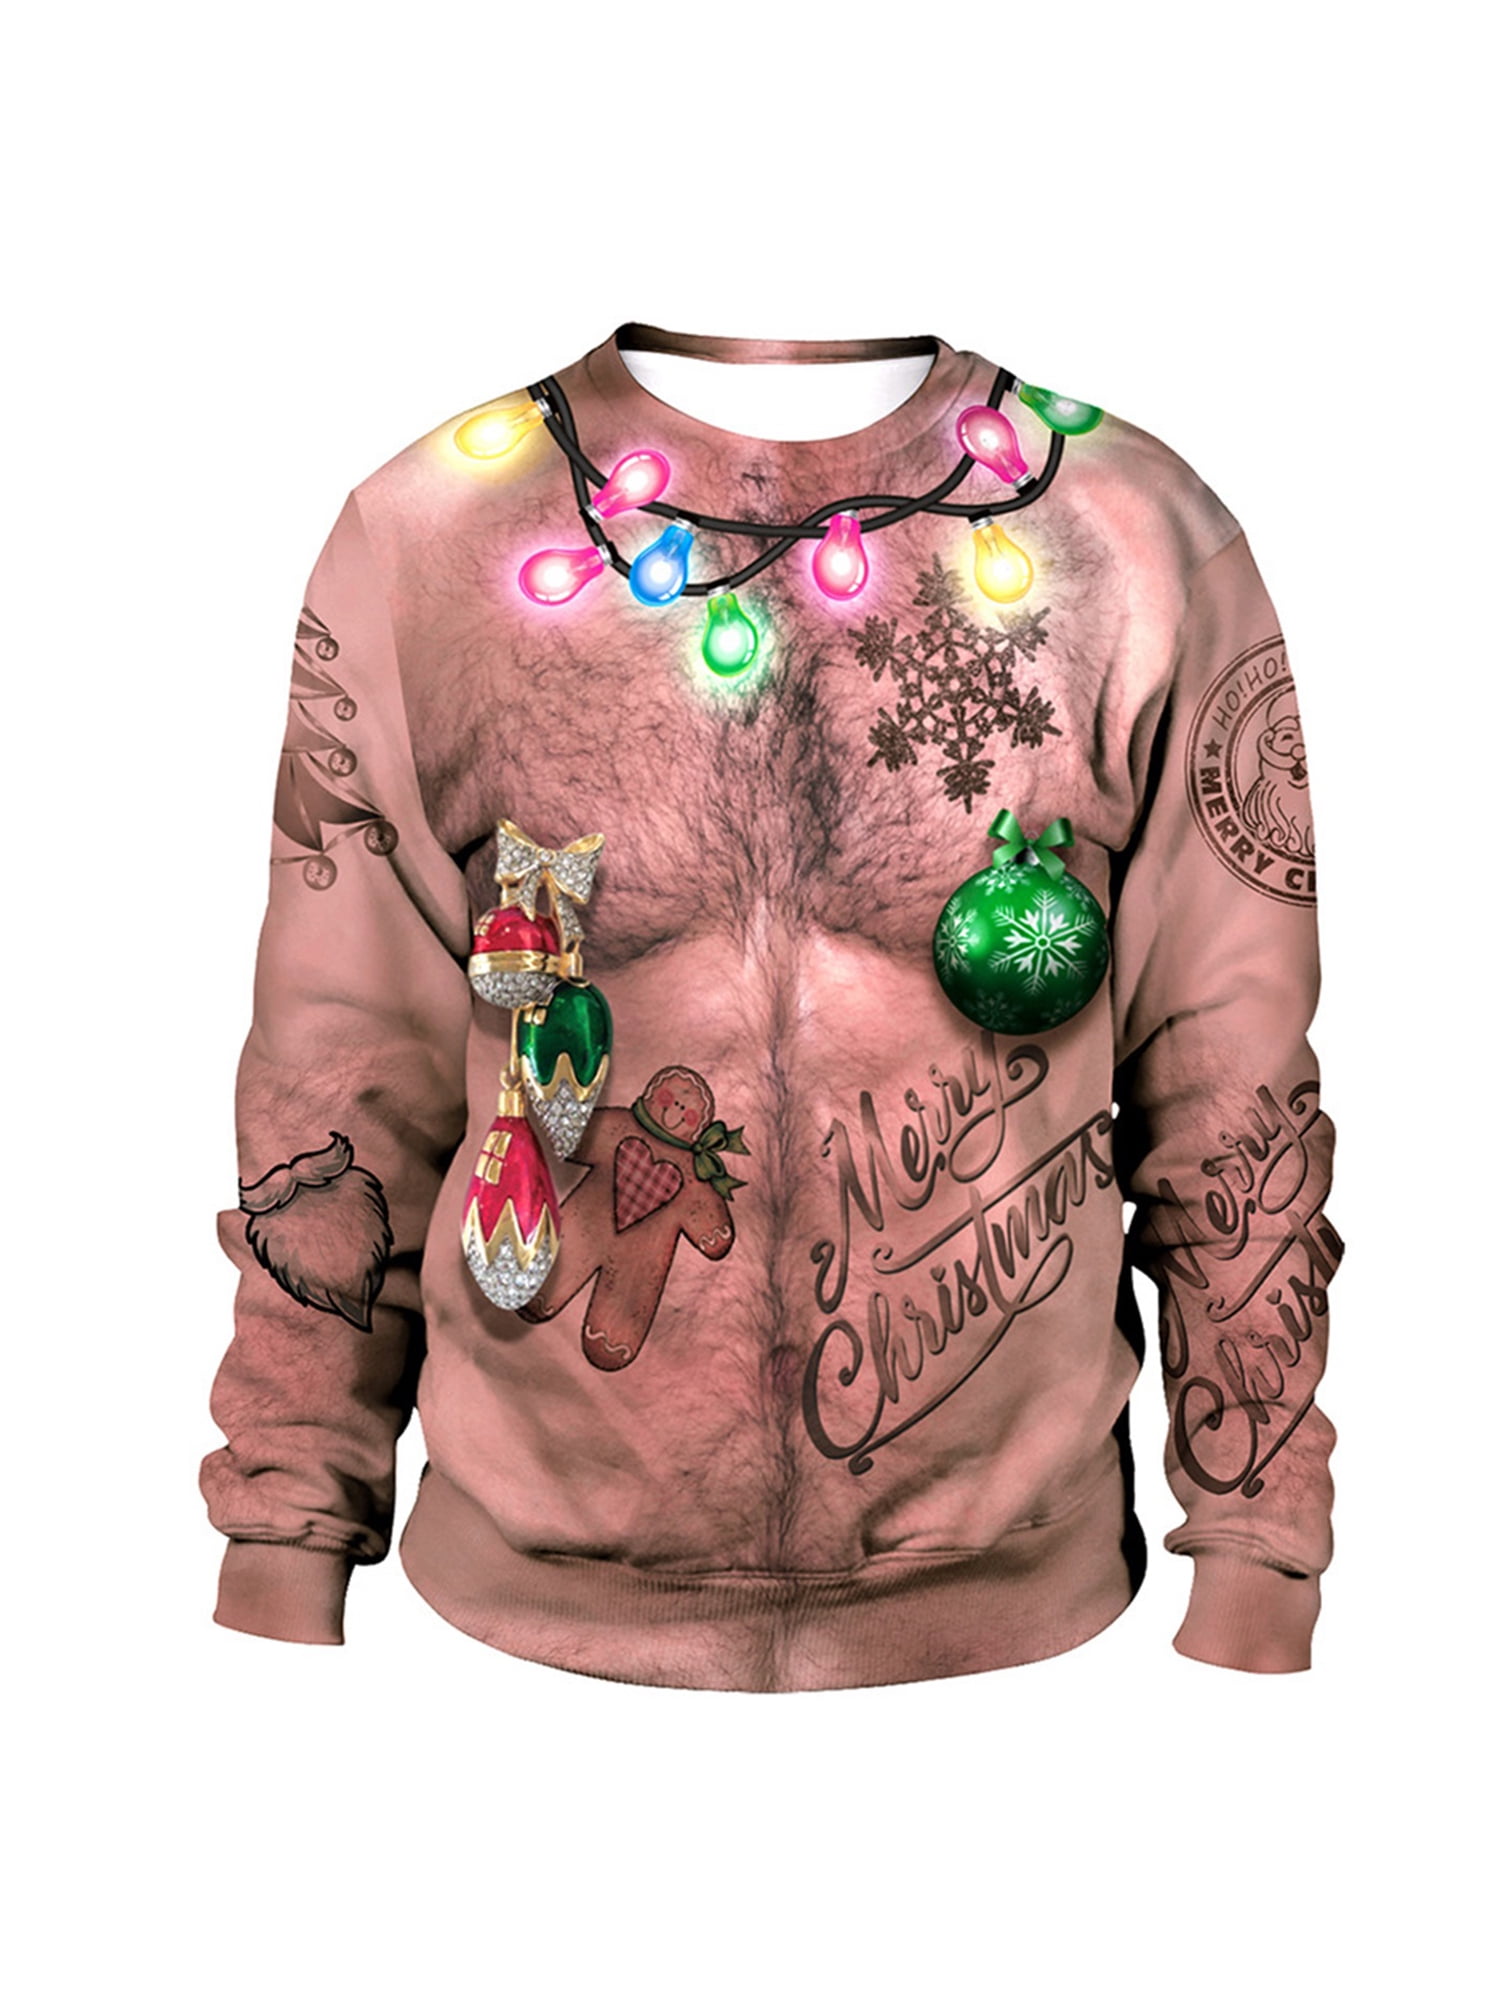 Unisex Ugly Christmas Sweatshirt Men Women Novelty 3D Printing Xmas Santa Reindeer Hoodie & Crew Neck Sweatshirt